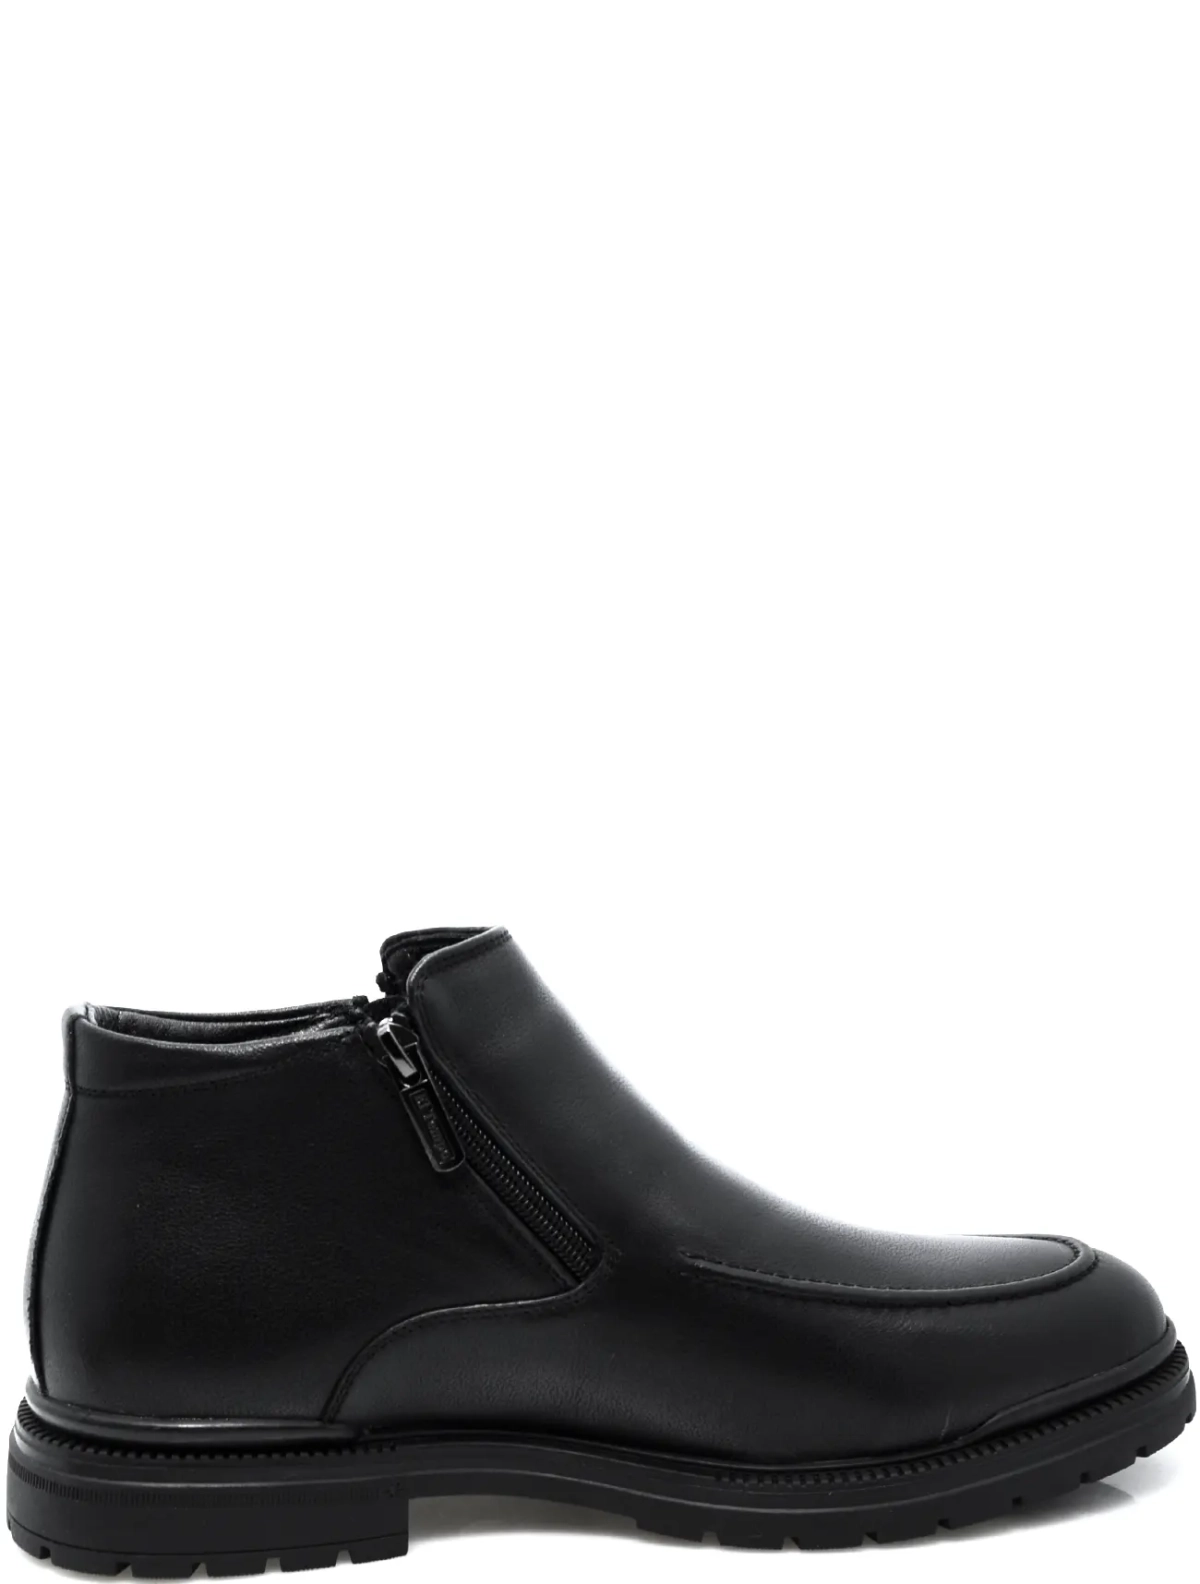 El Tempo CSN479-21390-1-W мужские ботинки